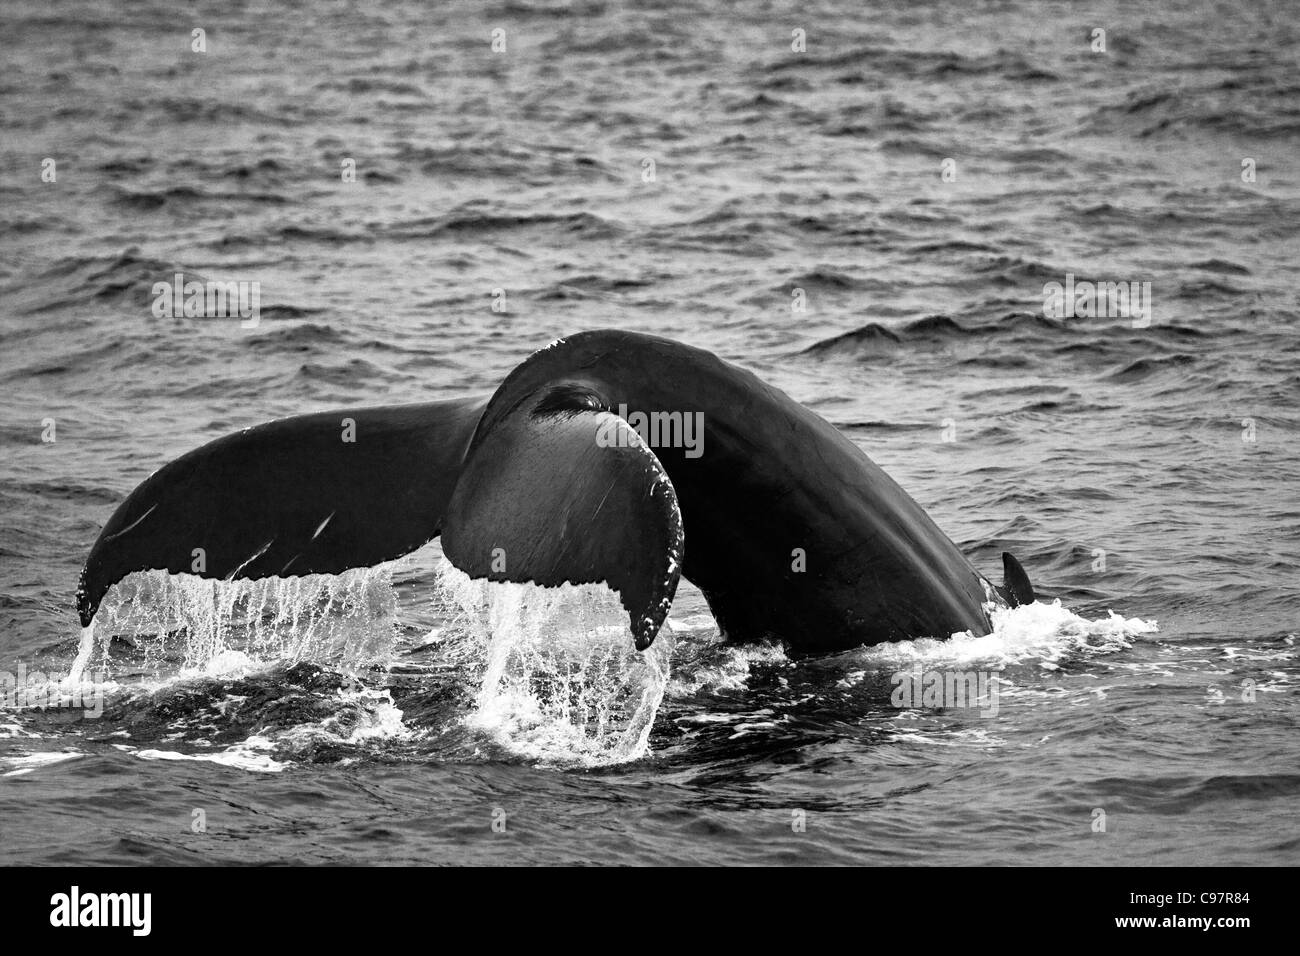 Humpback whale breaching megaptera novaeangliae Black and White Stock ...